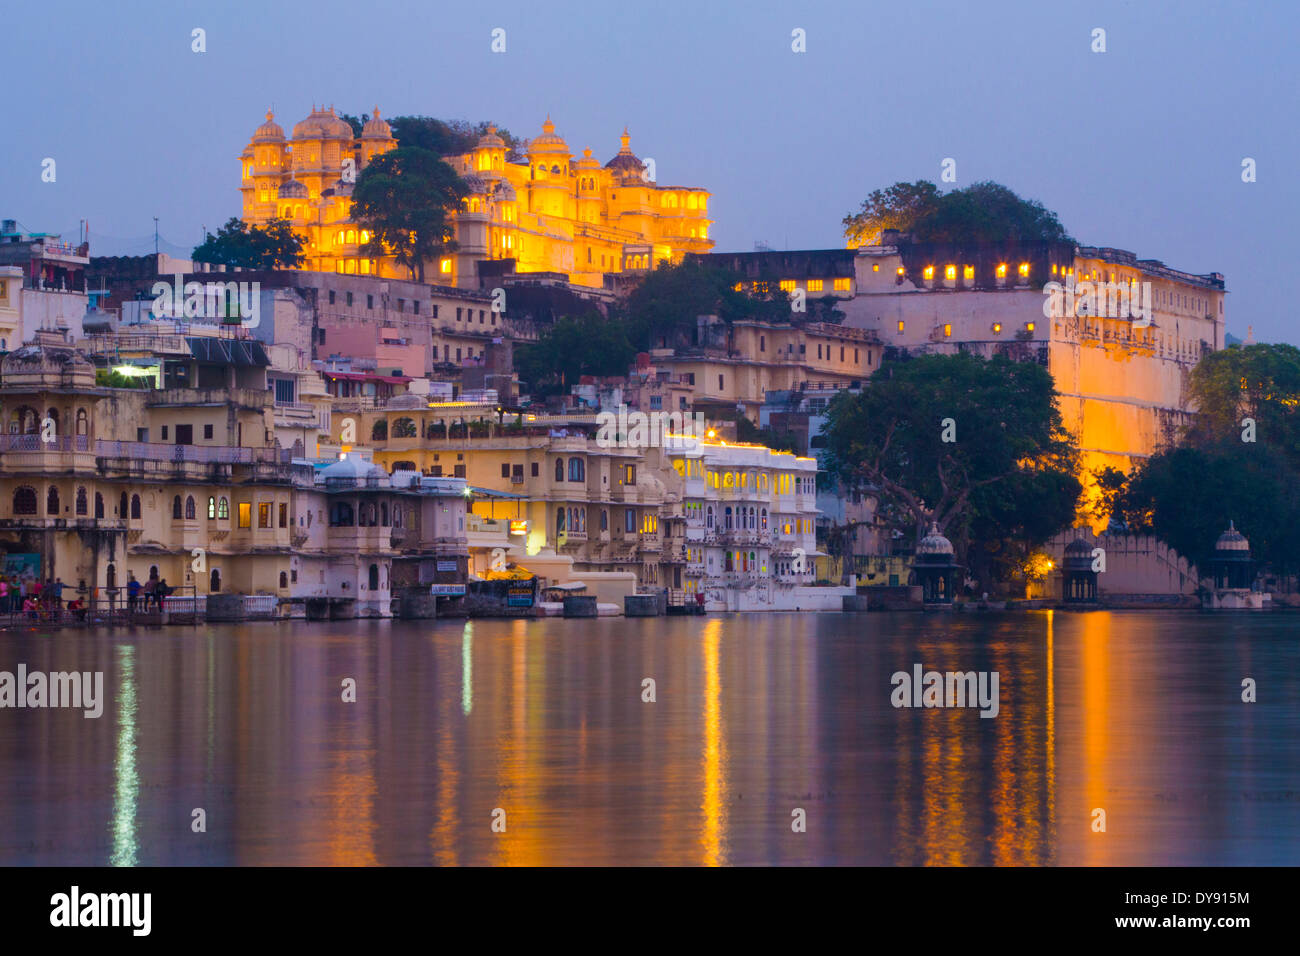 Palace, Maharana, Pichola, lake Pichola, Udaipur, Rajasthan, Asia, India, lake, night, illuminated, Stock Photo